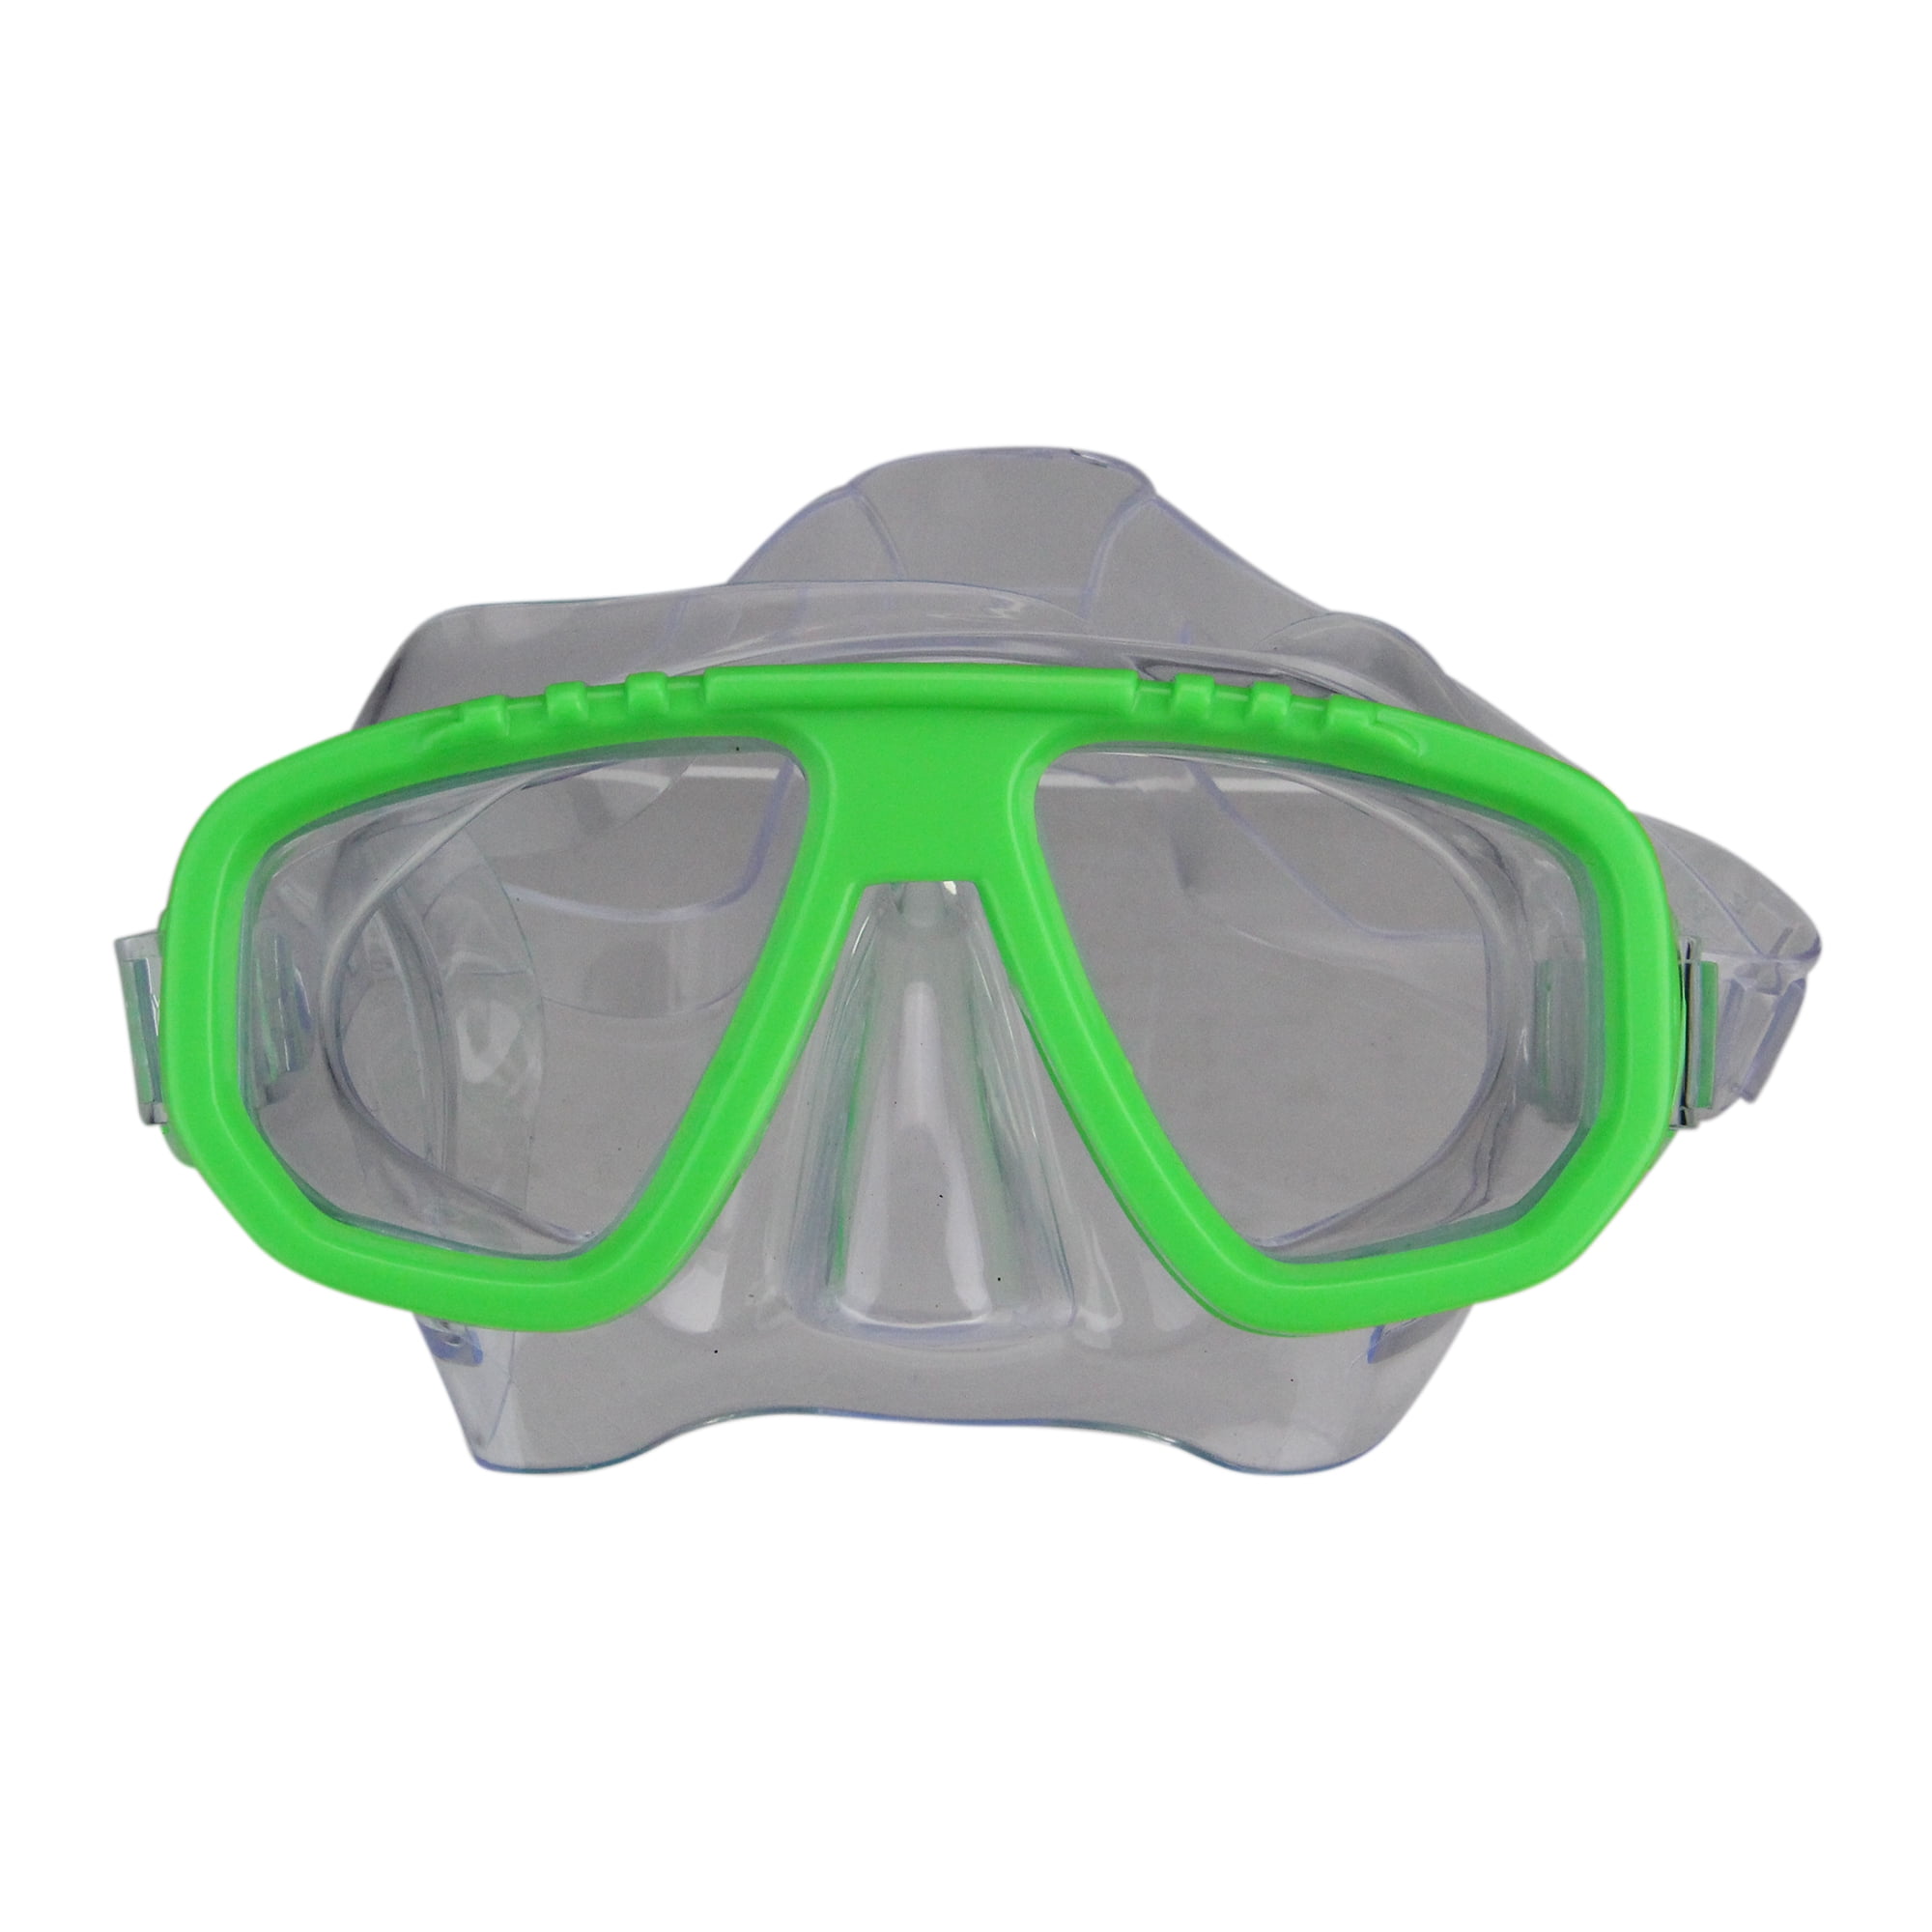 Details about   Swimline Youth Adult Size Swim Snorkle Goggles Orange Leak Resistant 